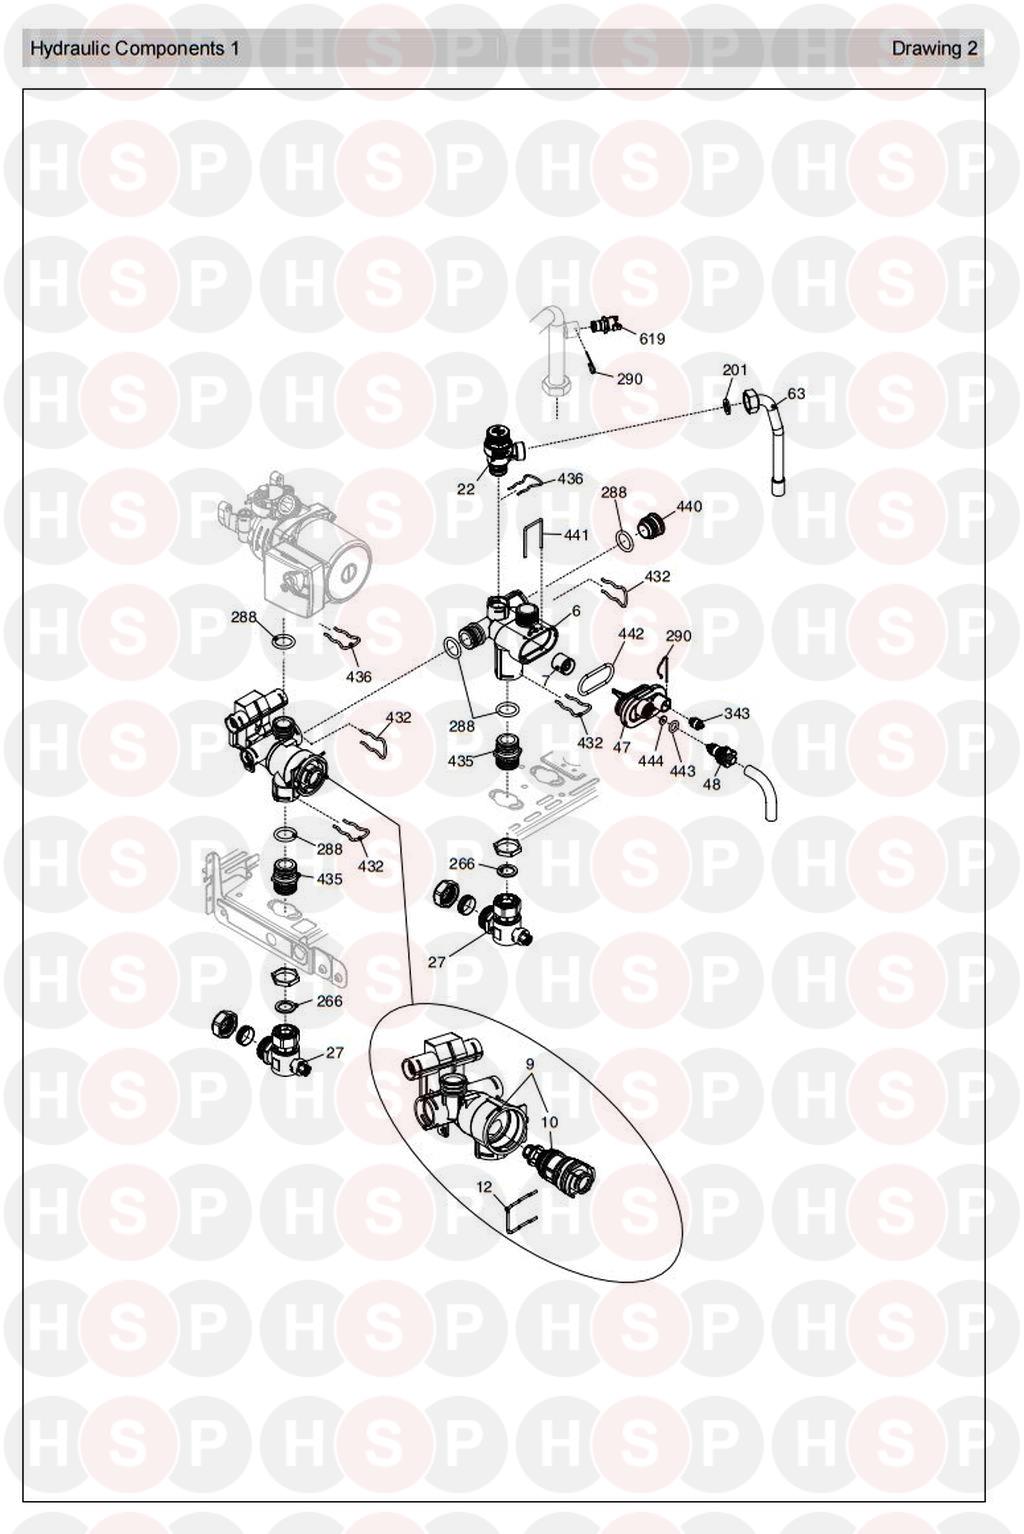 Hydraulics 1 diagram for Vokera Mynute 24 SE Rev 8 (07/2014)